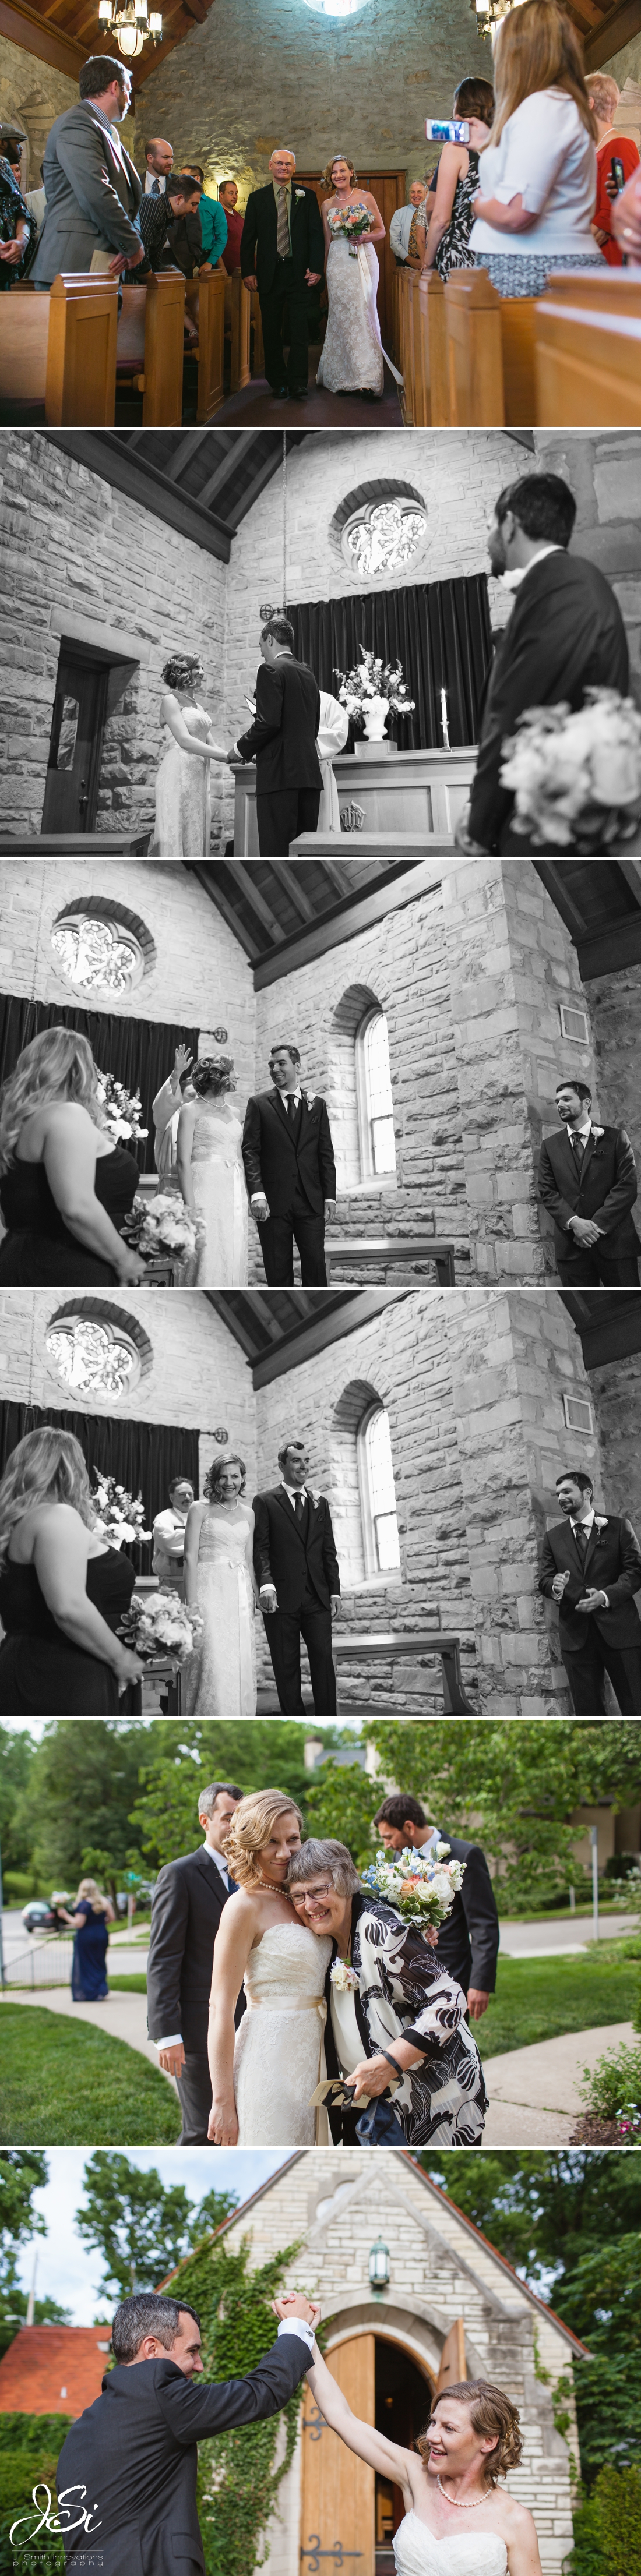 Kansas City Pilgrim Chapel intimate wedding ceremony photo